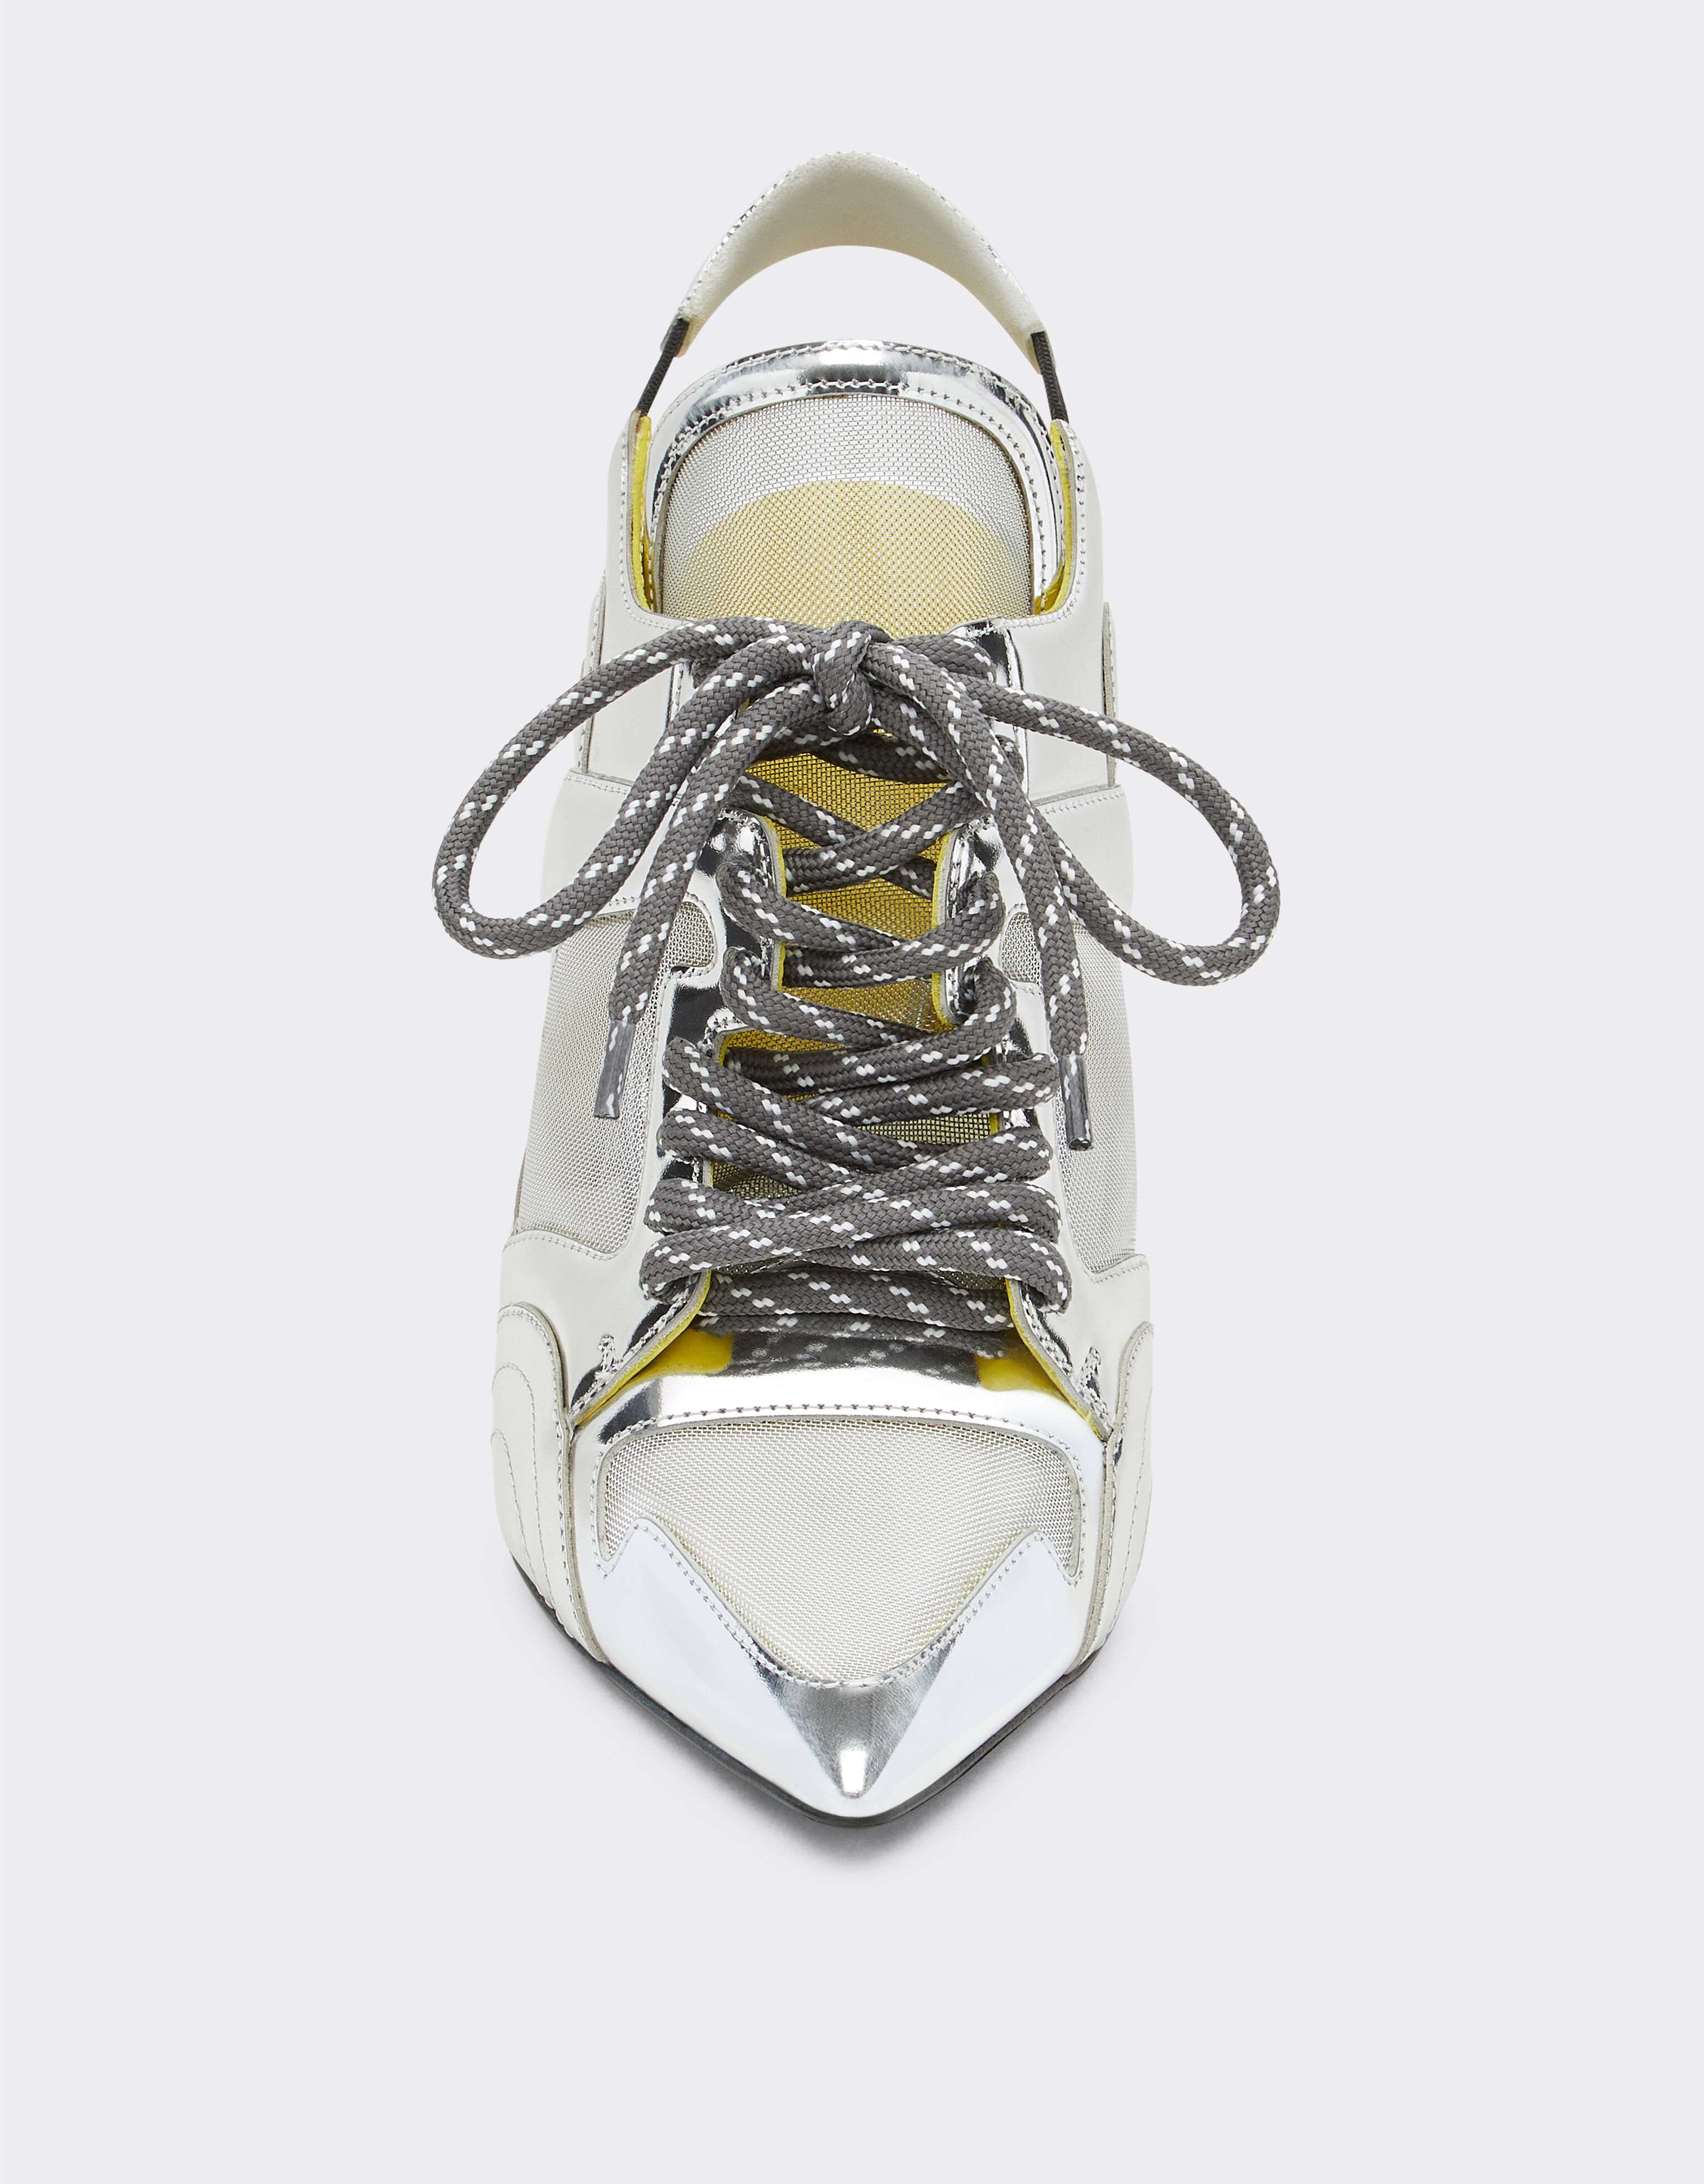 Ferrari Miami Collection Slingback-Sandale aus silbernem Leder Silber 21272f